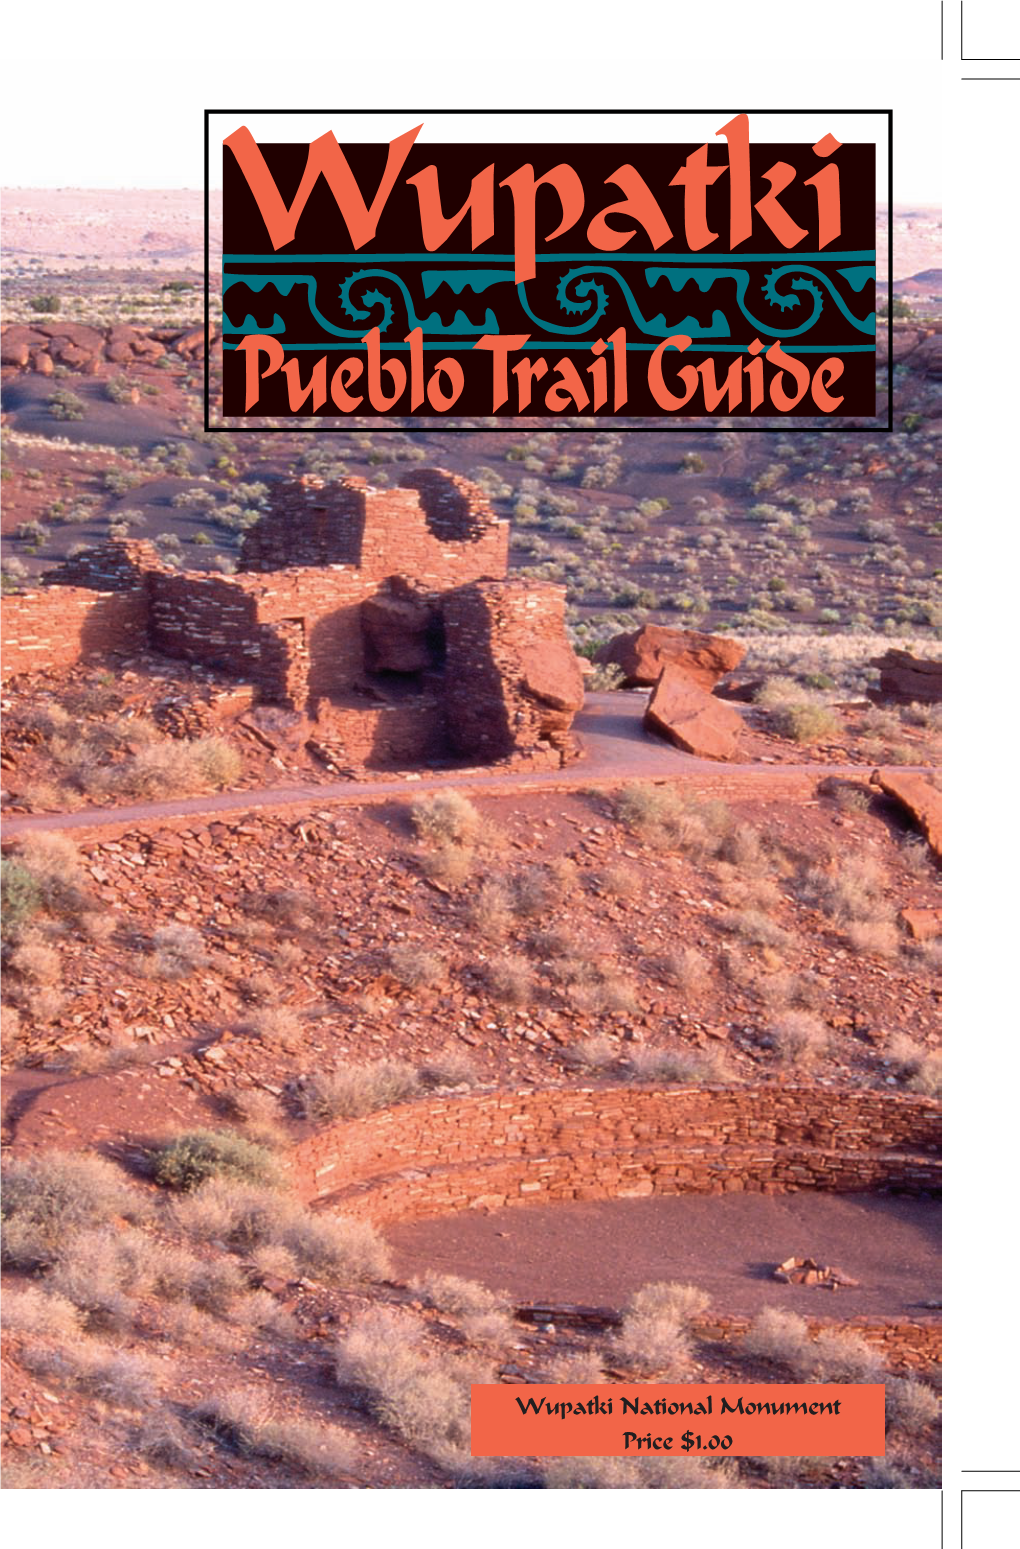 Wupatki National Monument Price $1.00 Wupatki Pueblo Trail Guide